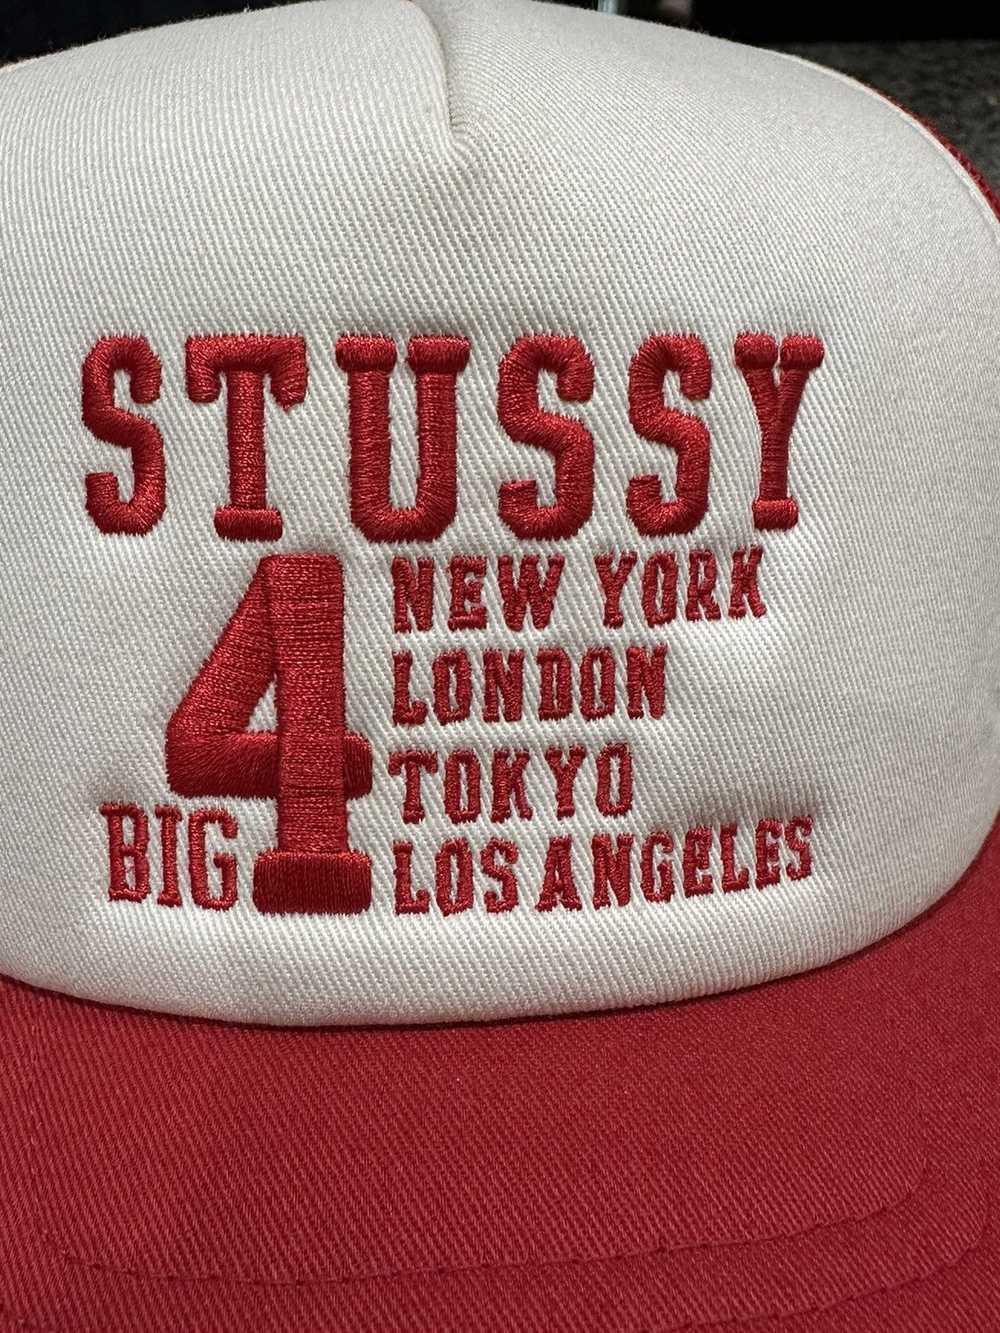 Stussy Stussy Big 4 mesh hat - image 2